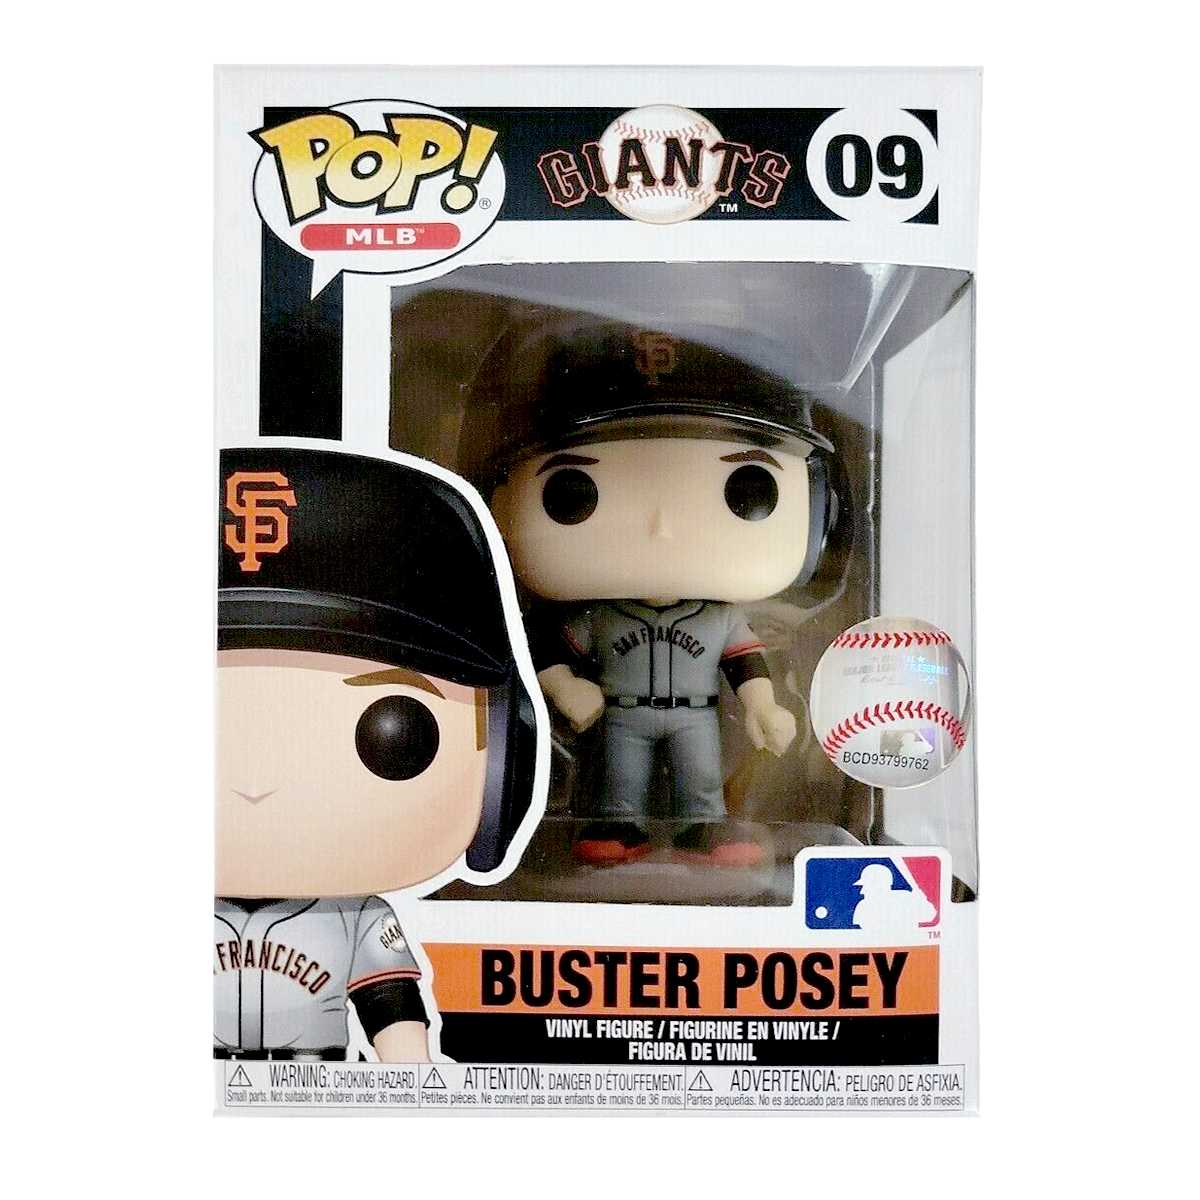 Funko Pop! MLB Baseball Giants Buster Posey vinyl figure número 09